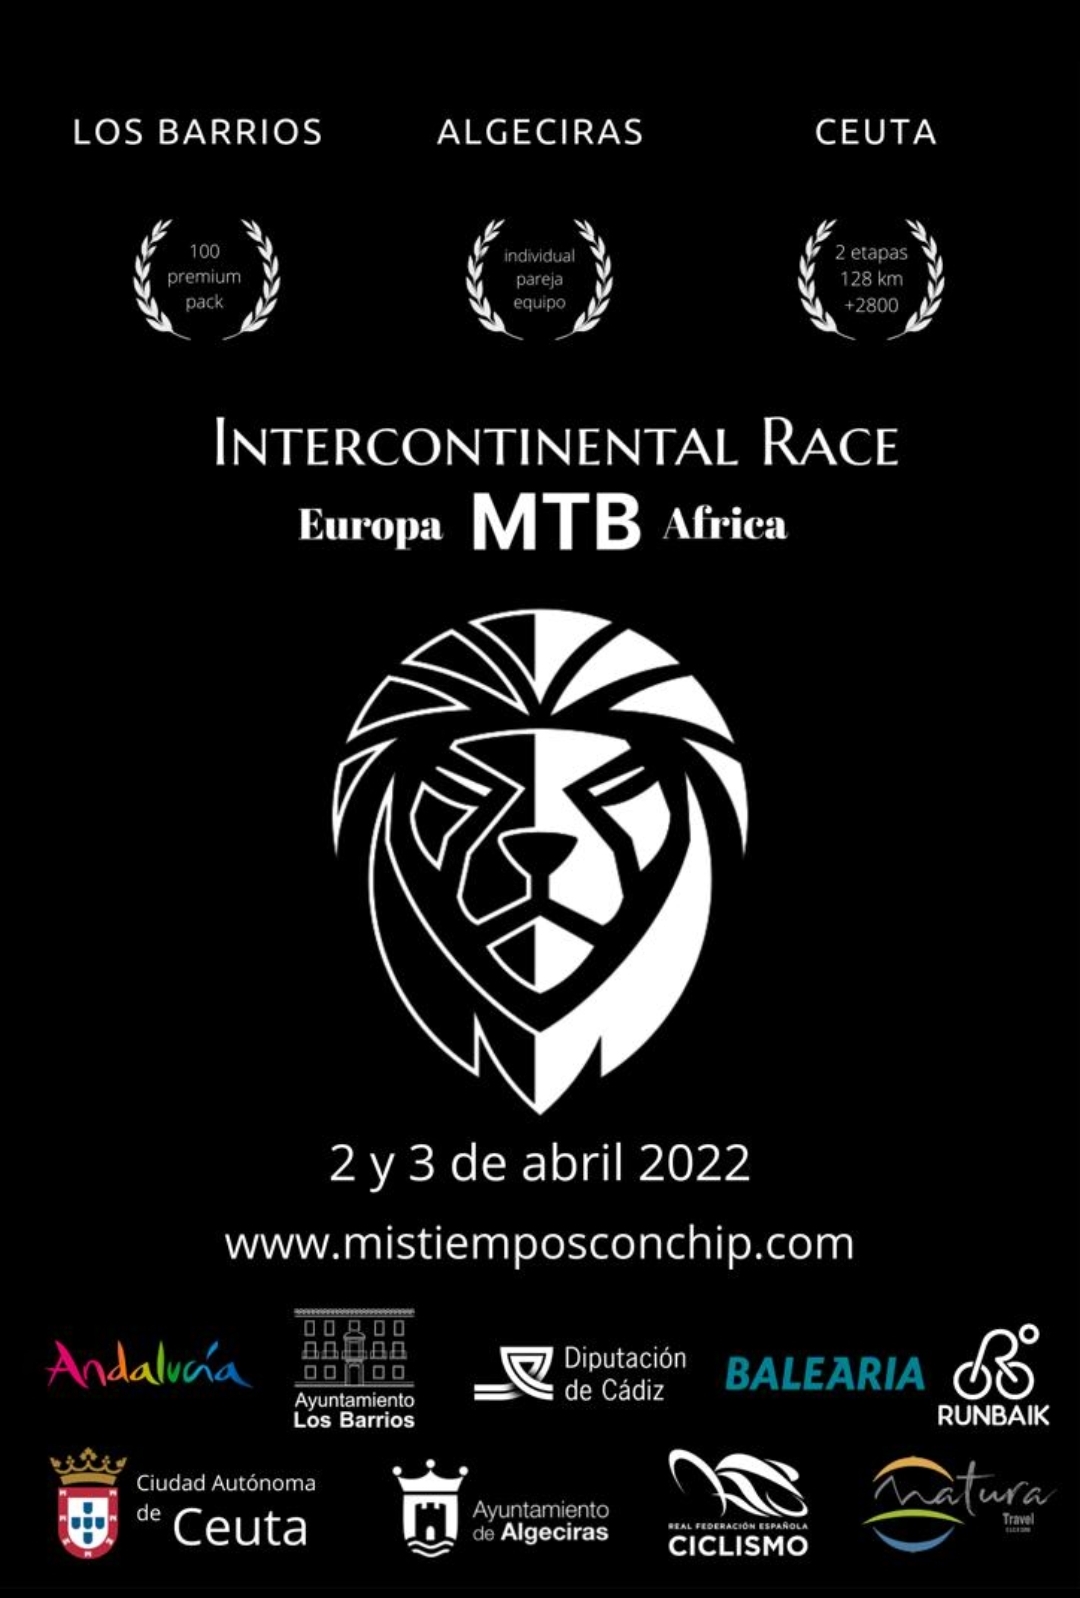 INTERCONTINENTAL RACE EUROPA MTB ÁFRICA